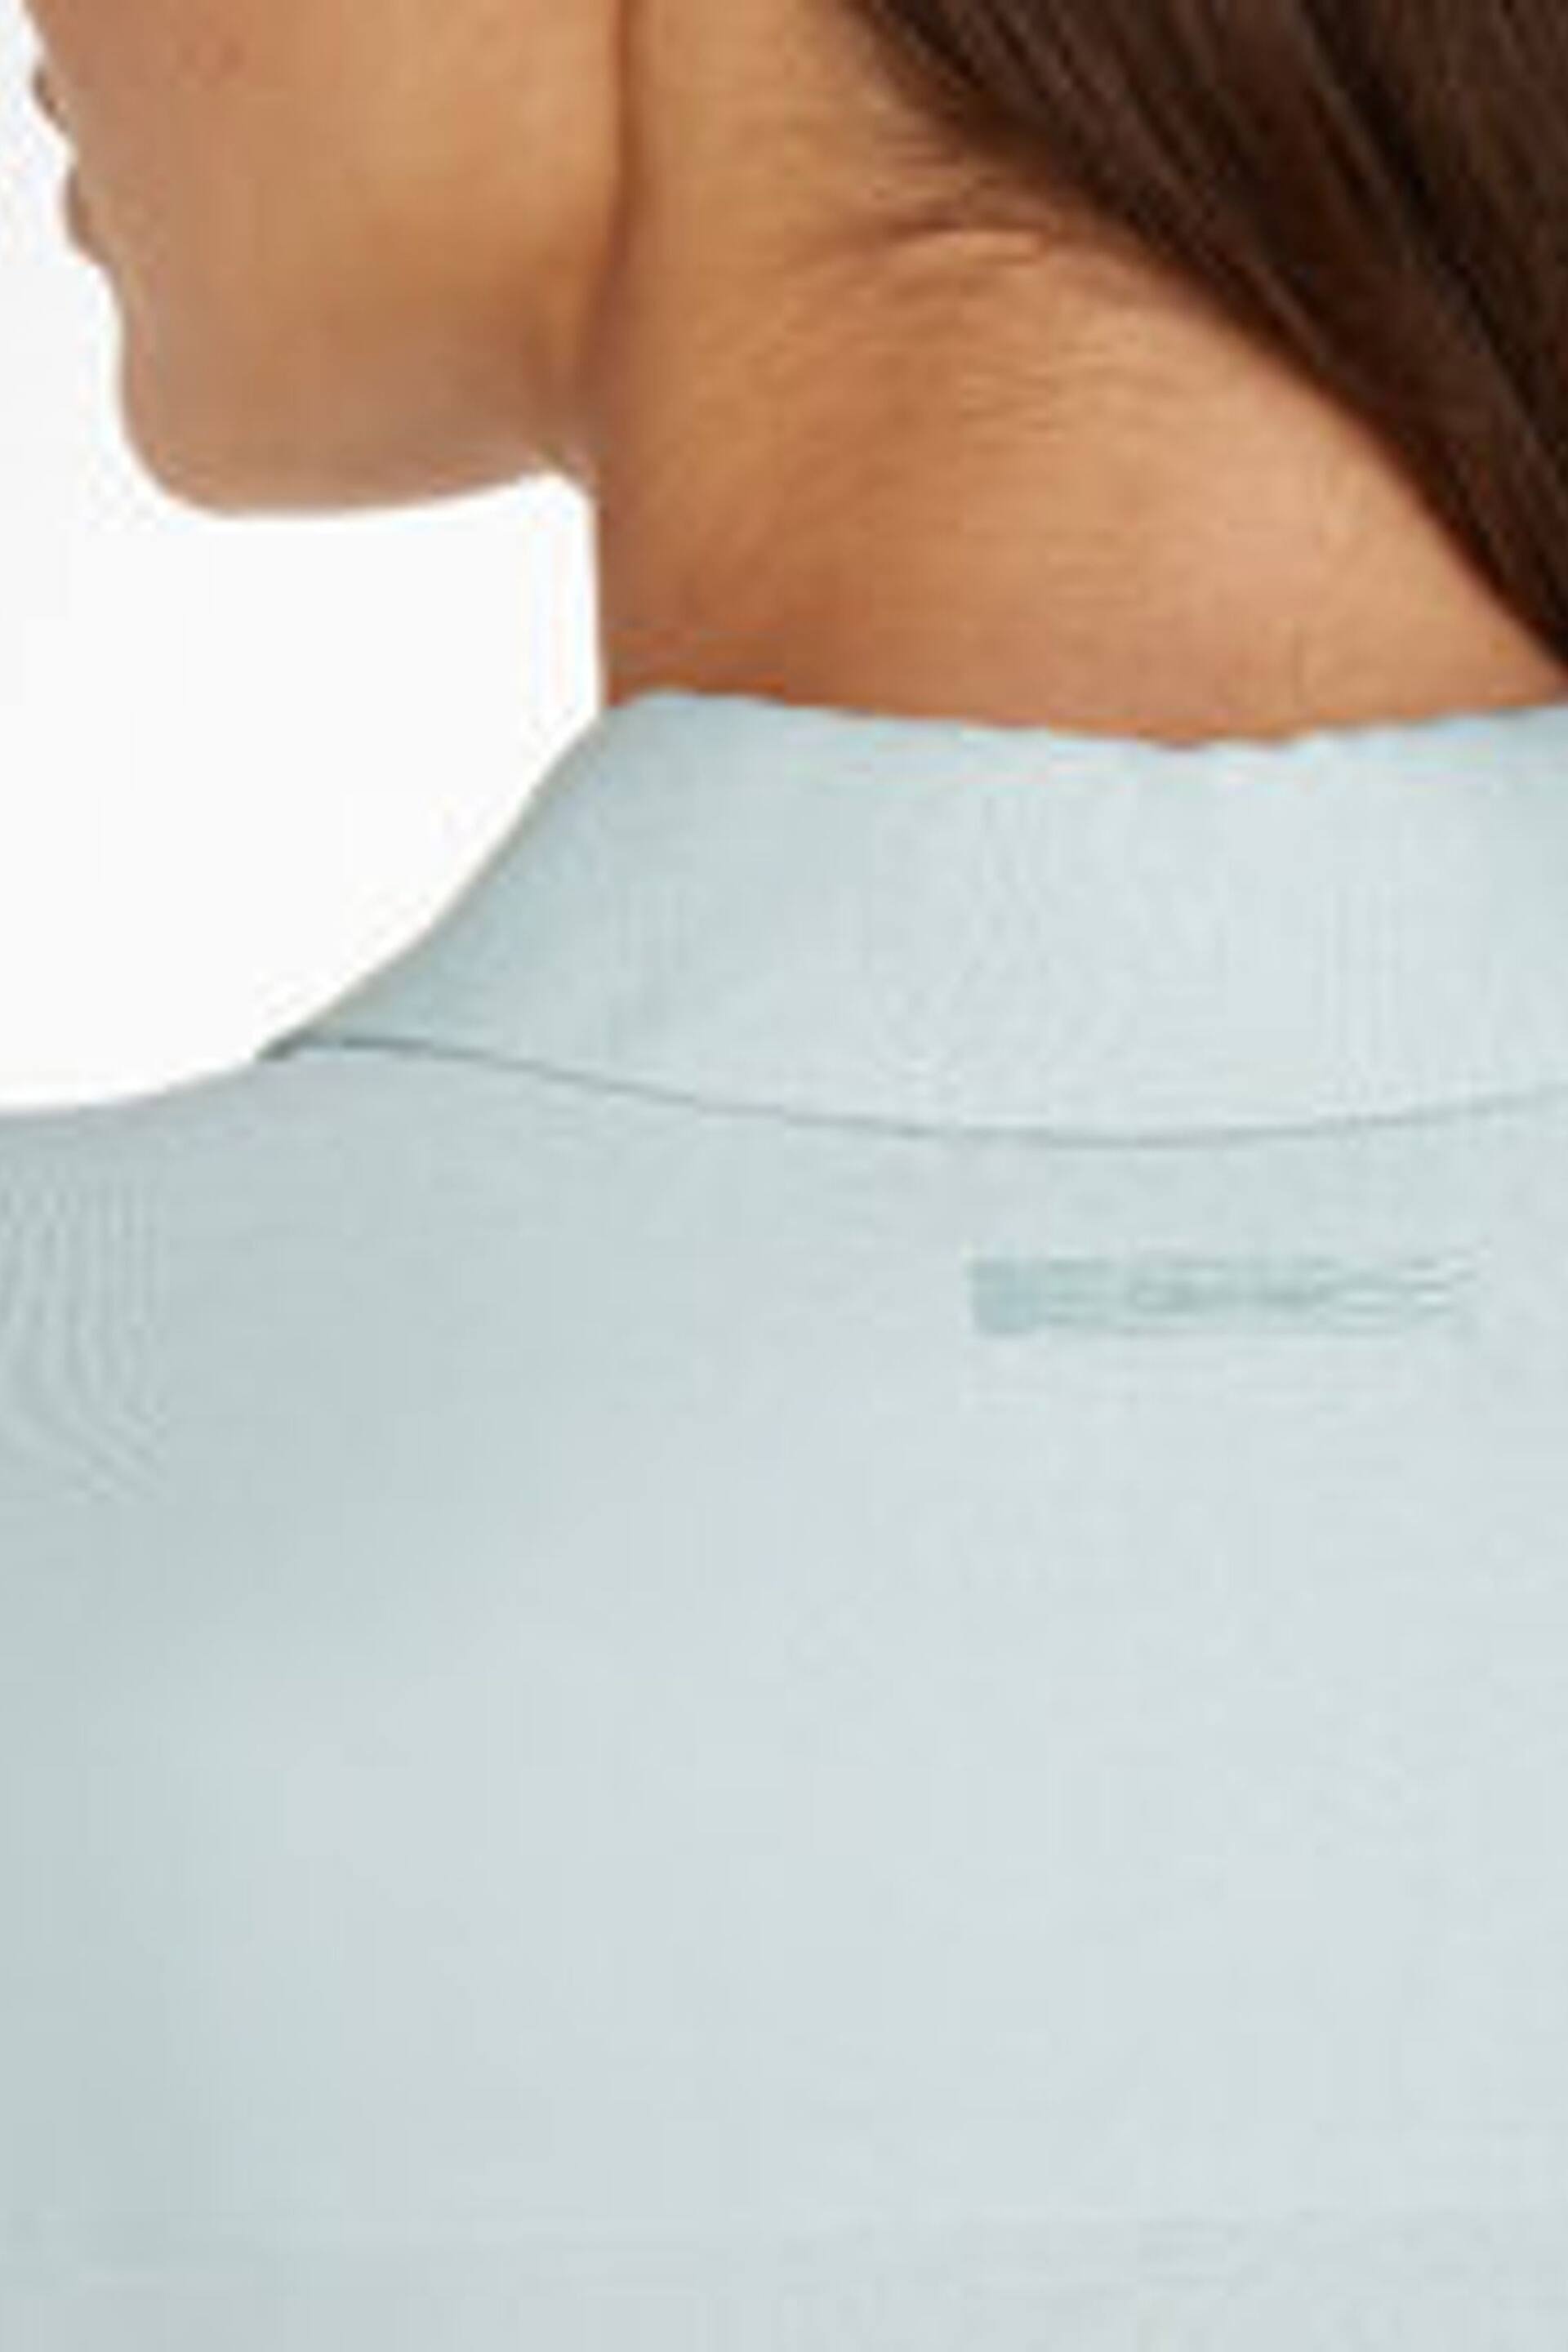 Calvin Klein Grey Relaxed Shirt - Image 3 of 6